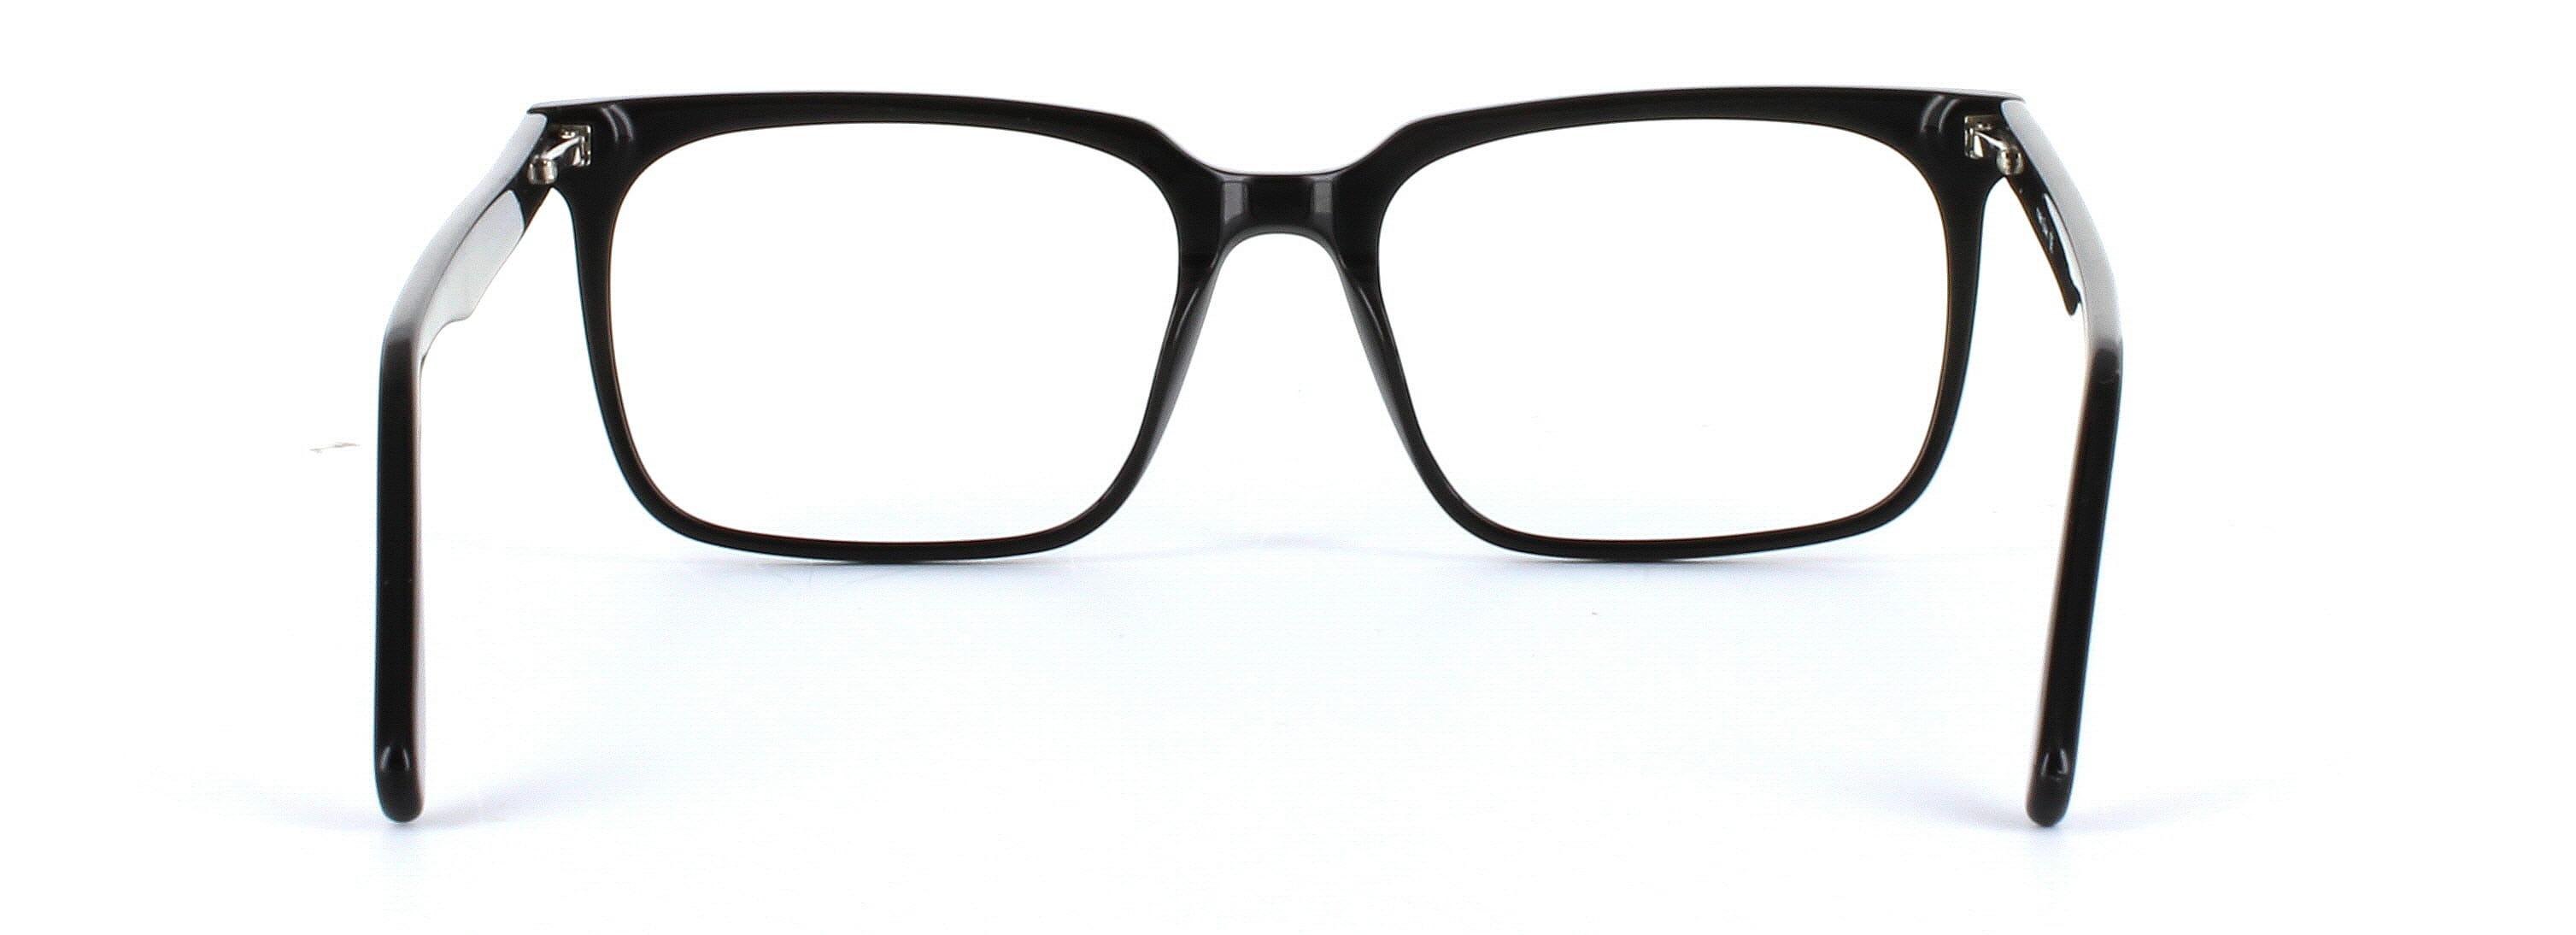 Men's re3ctangular large black acetate glasses - image 3